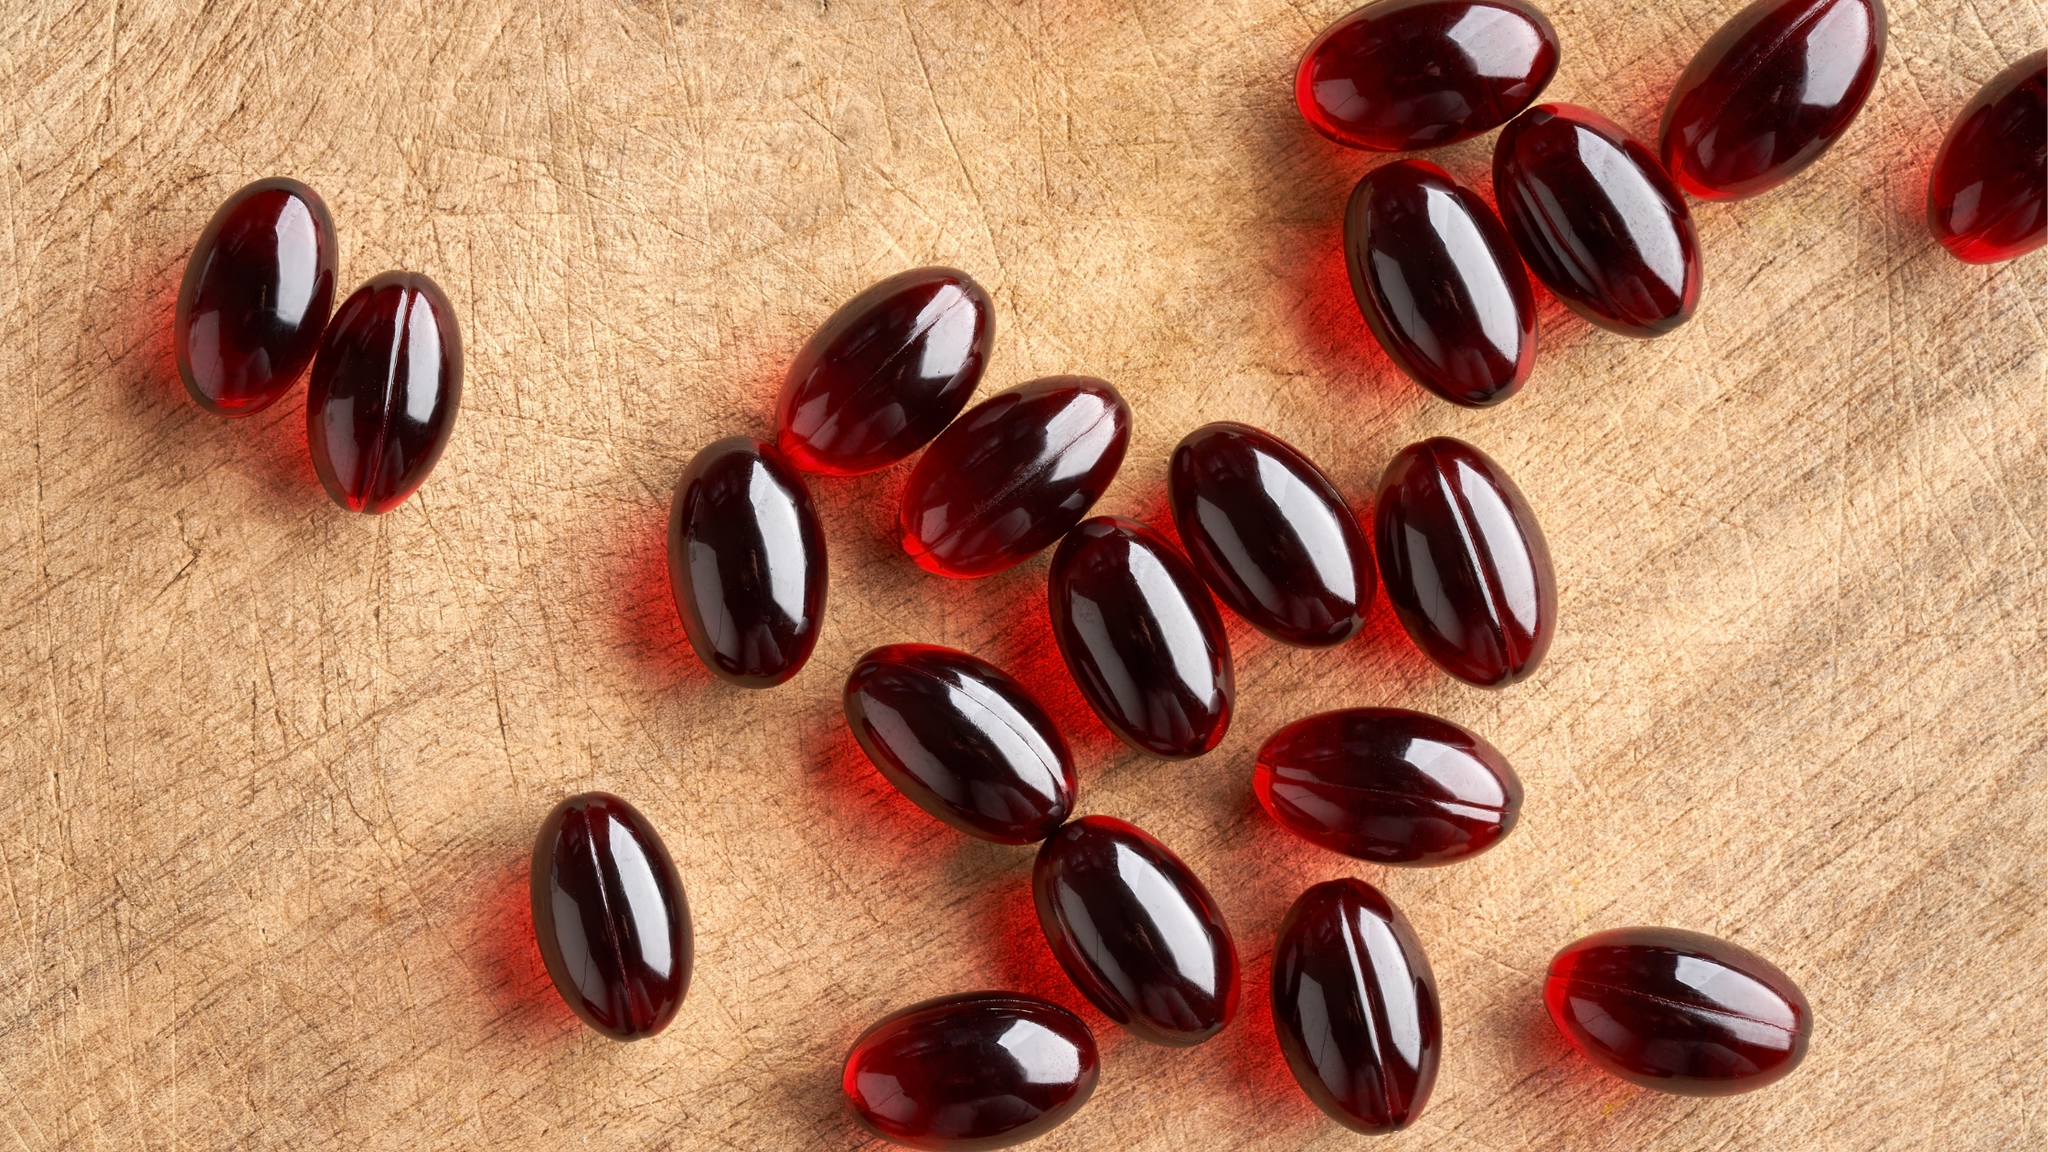 Krill oil supplements buy online